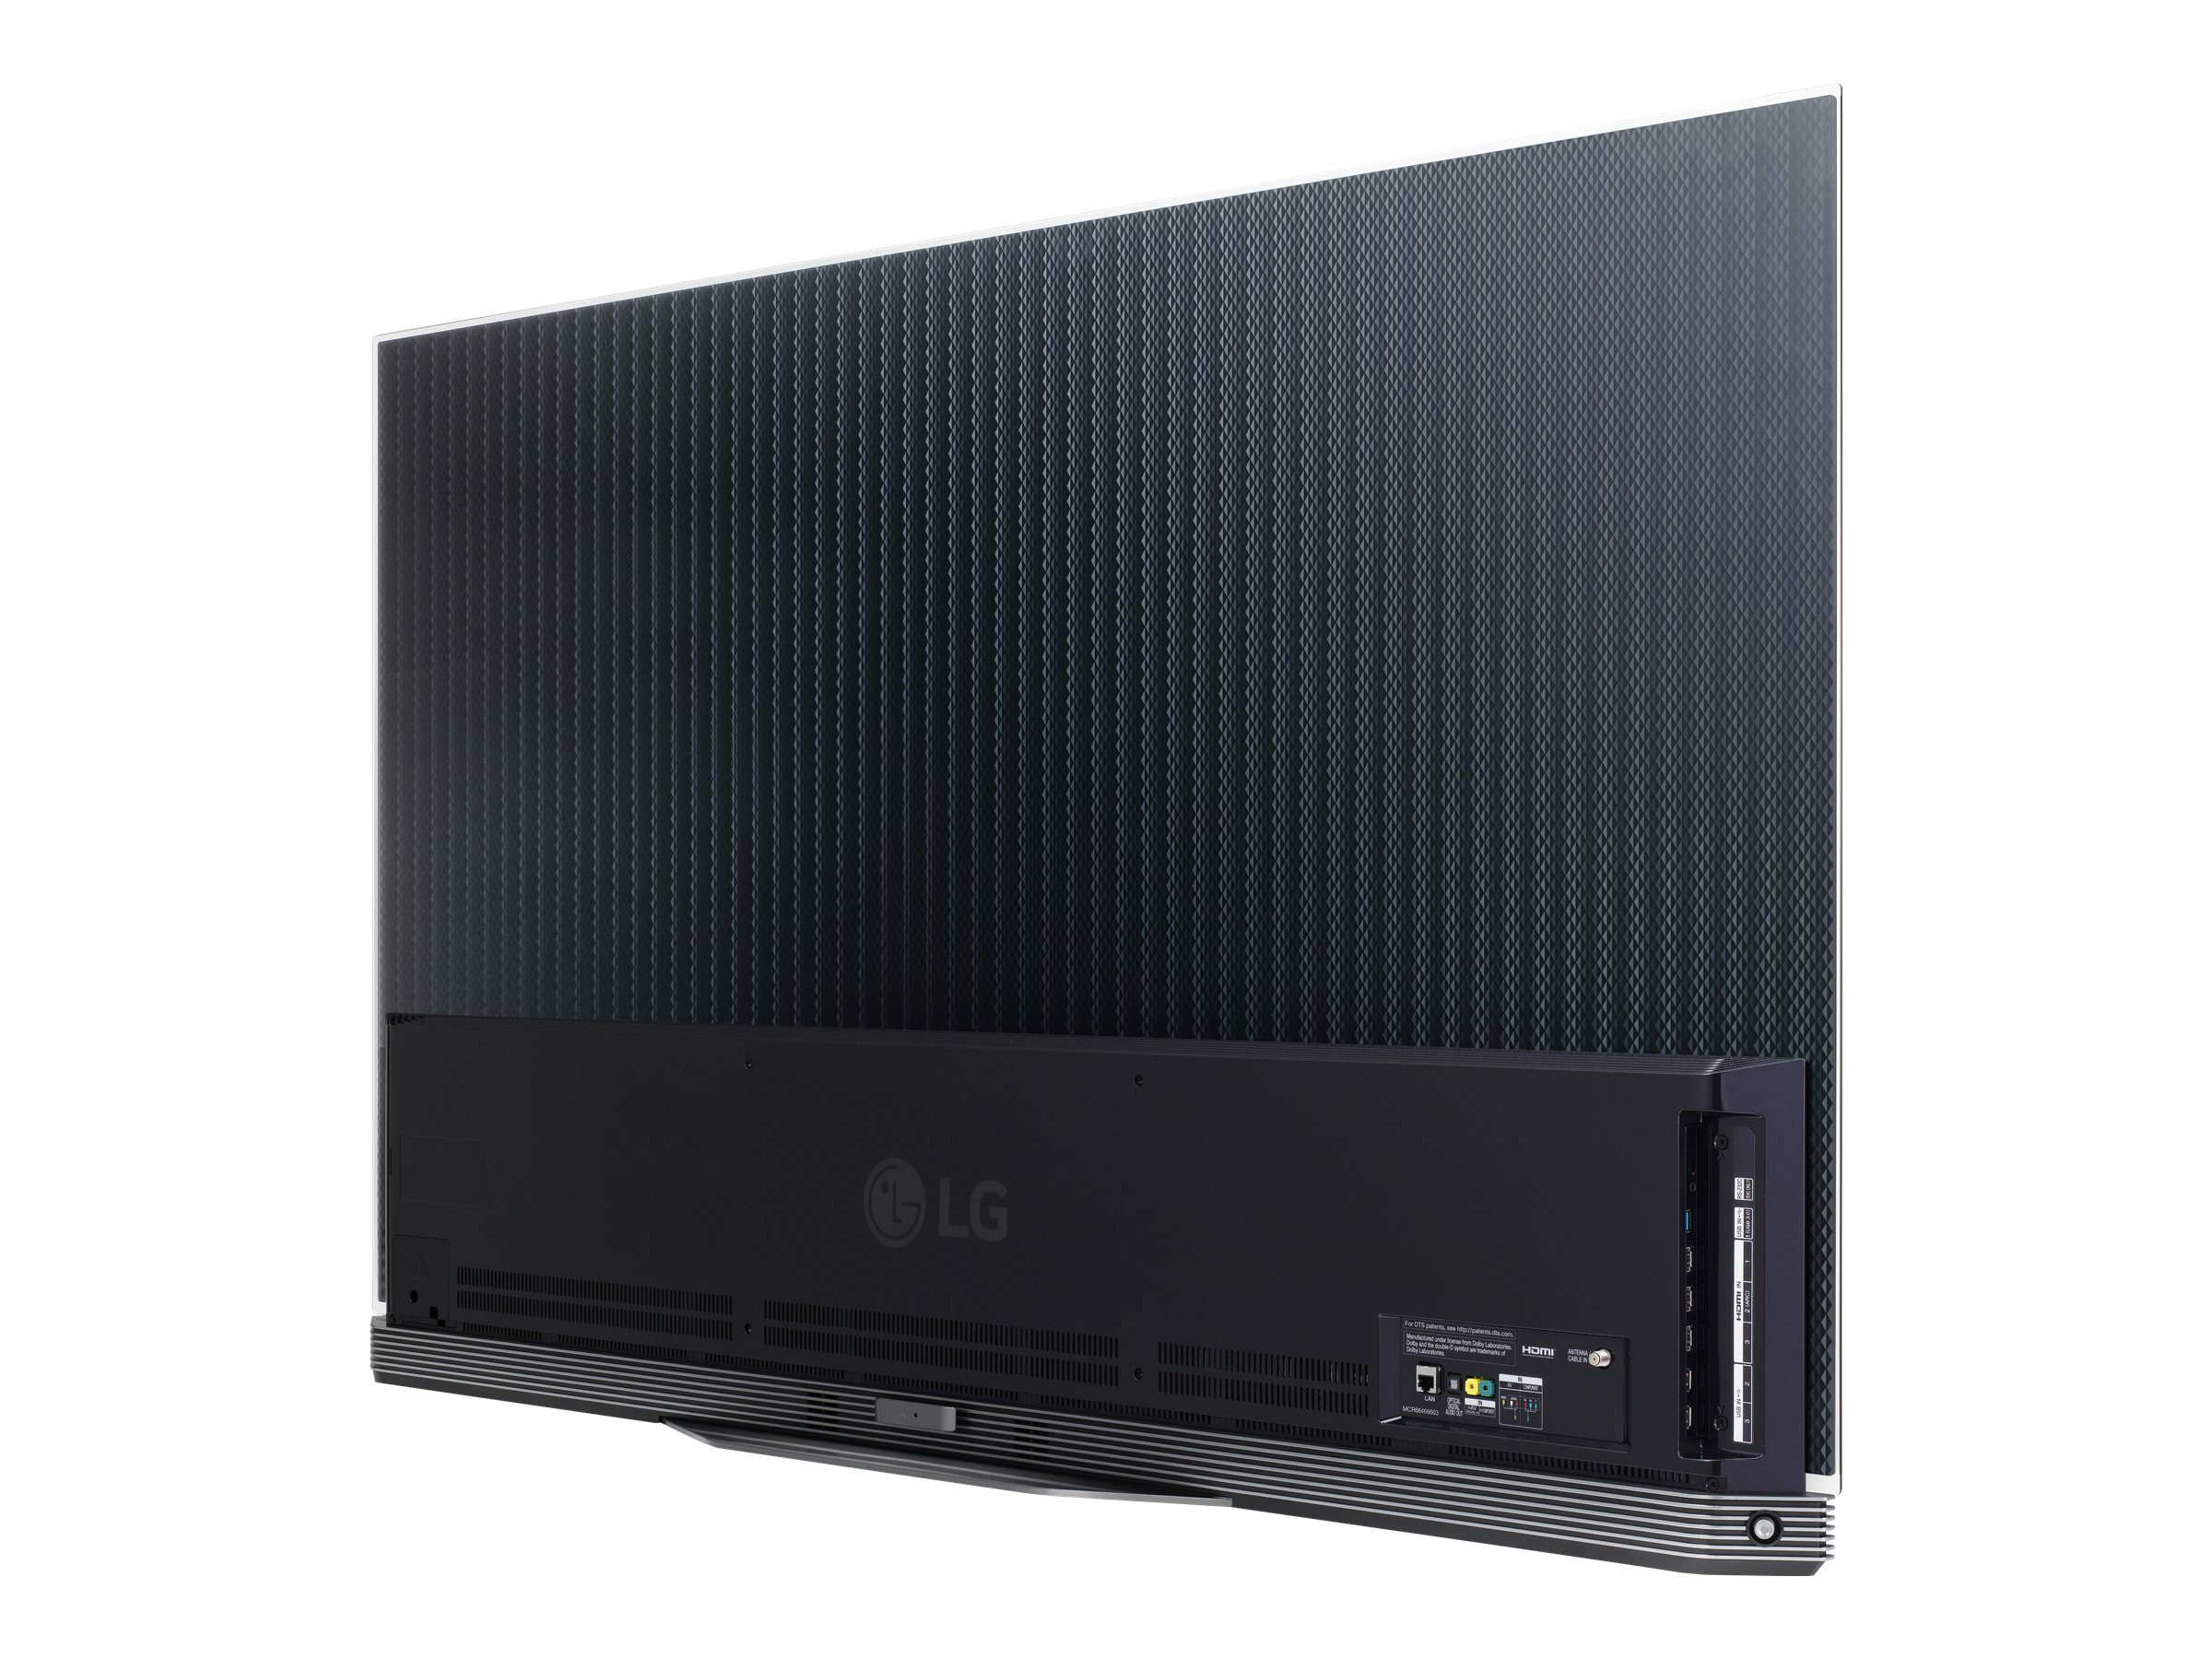 LG 55" Class 4K UHDTV (2160p) Smart OLED TV (OLED55E6P) - image 3 of 15